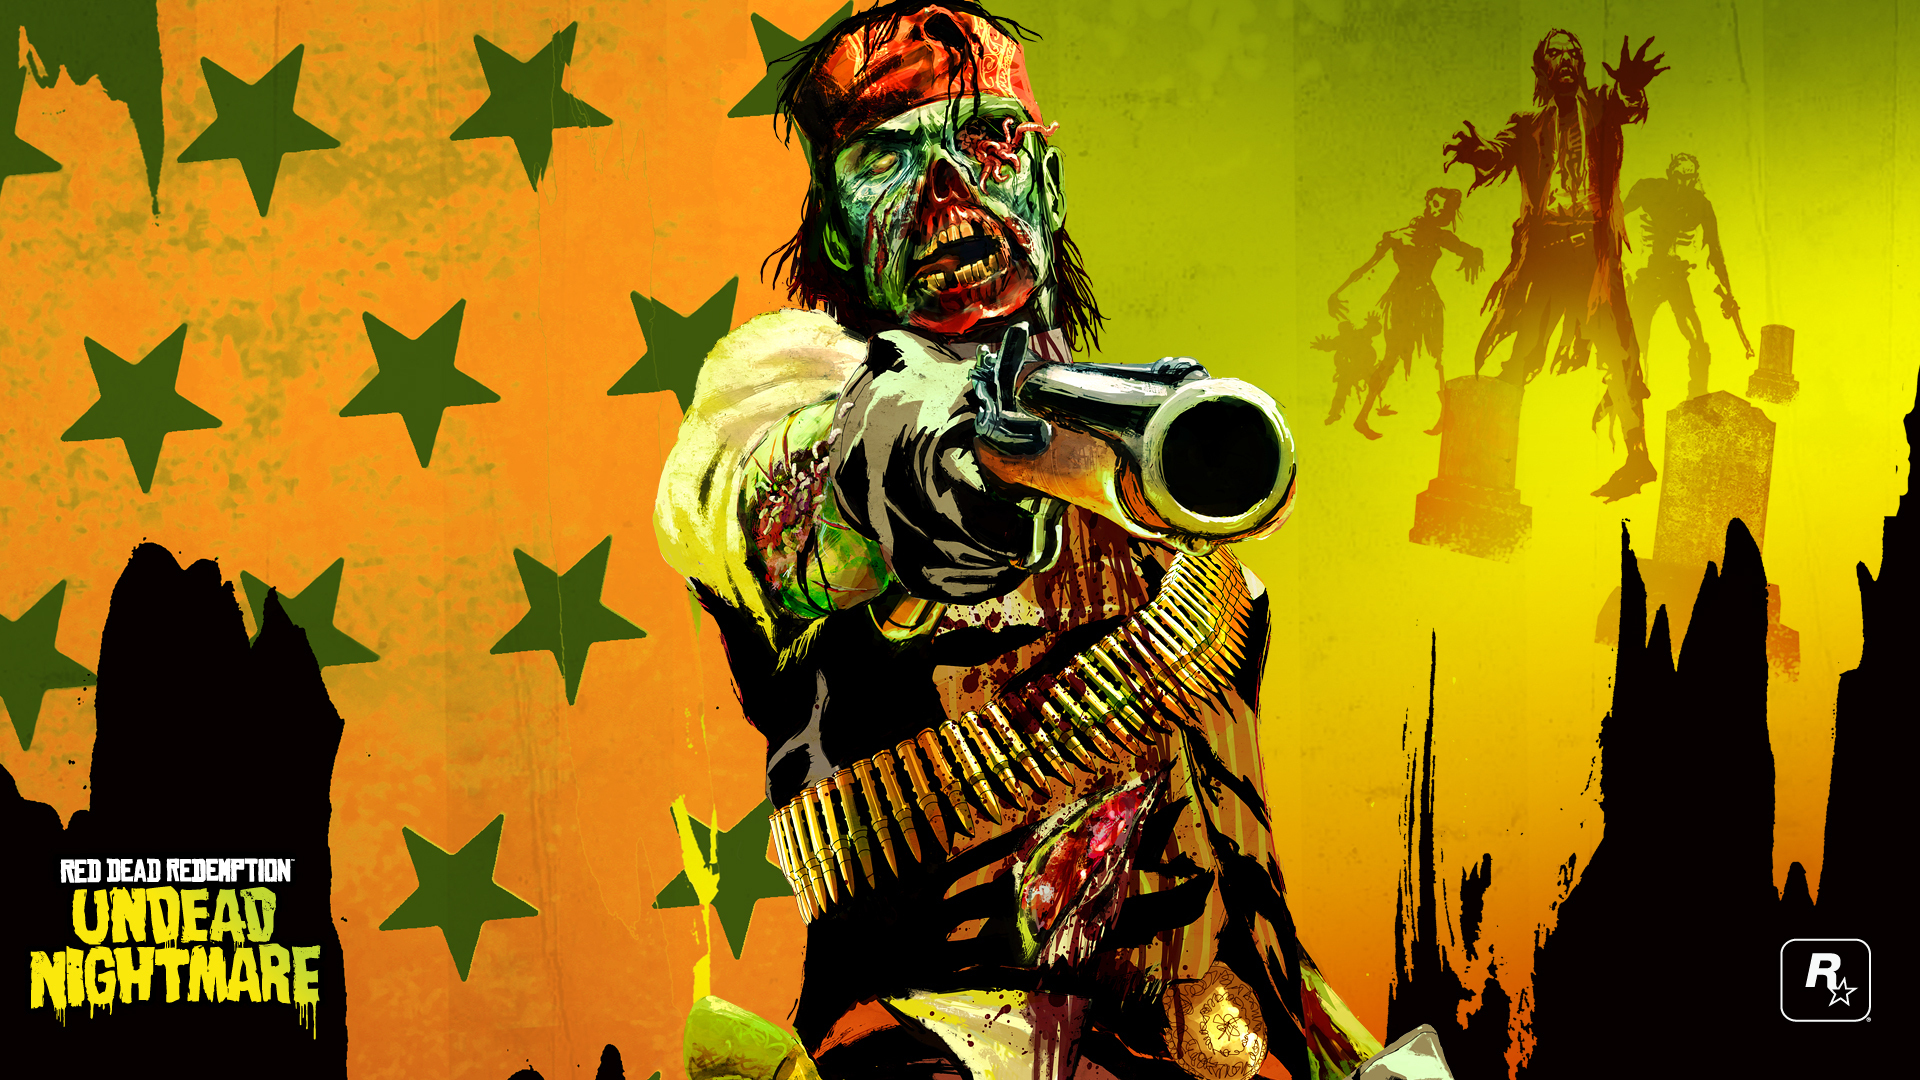 Red Dead Redemption: Undead Nightmare #18